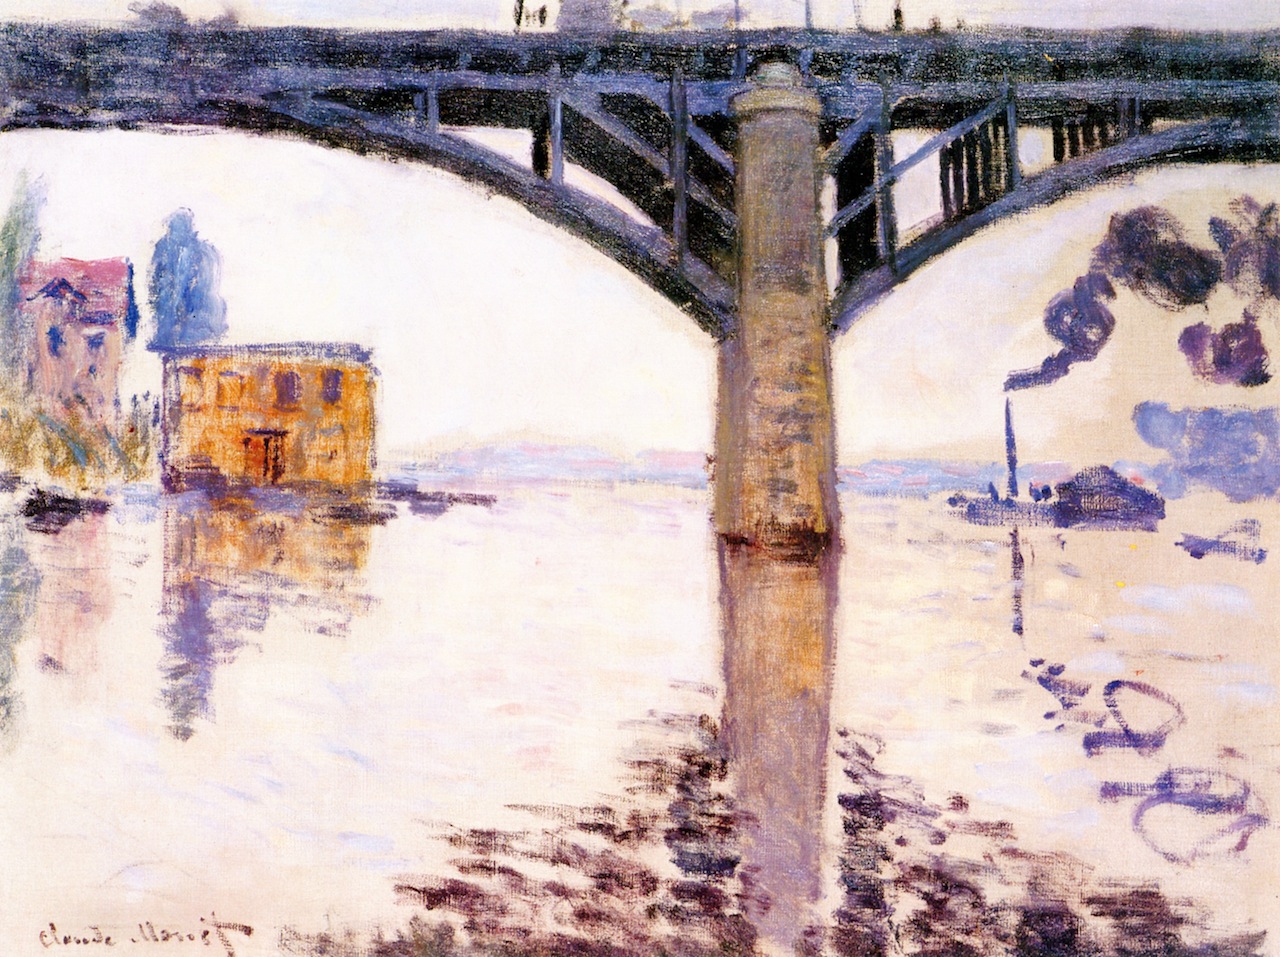 Claude+Monet-1840-1926 (805).jpg